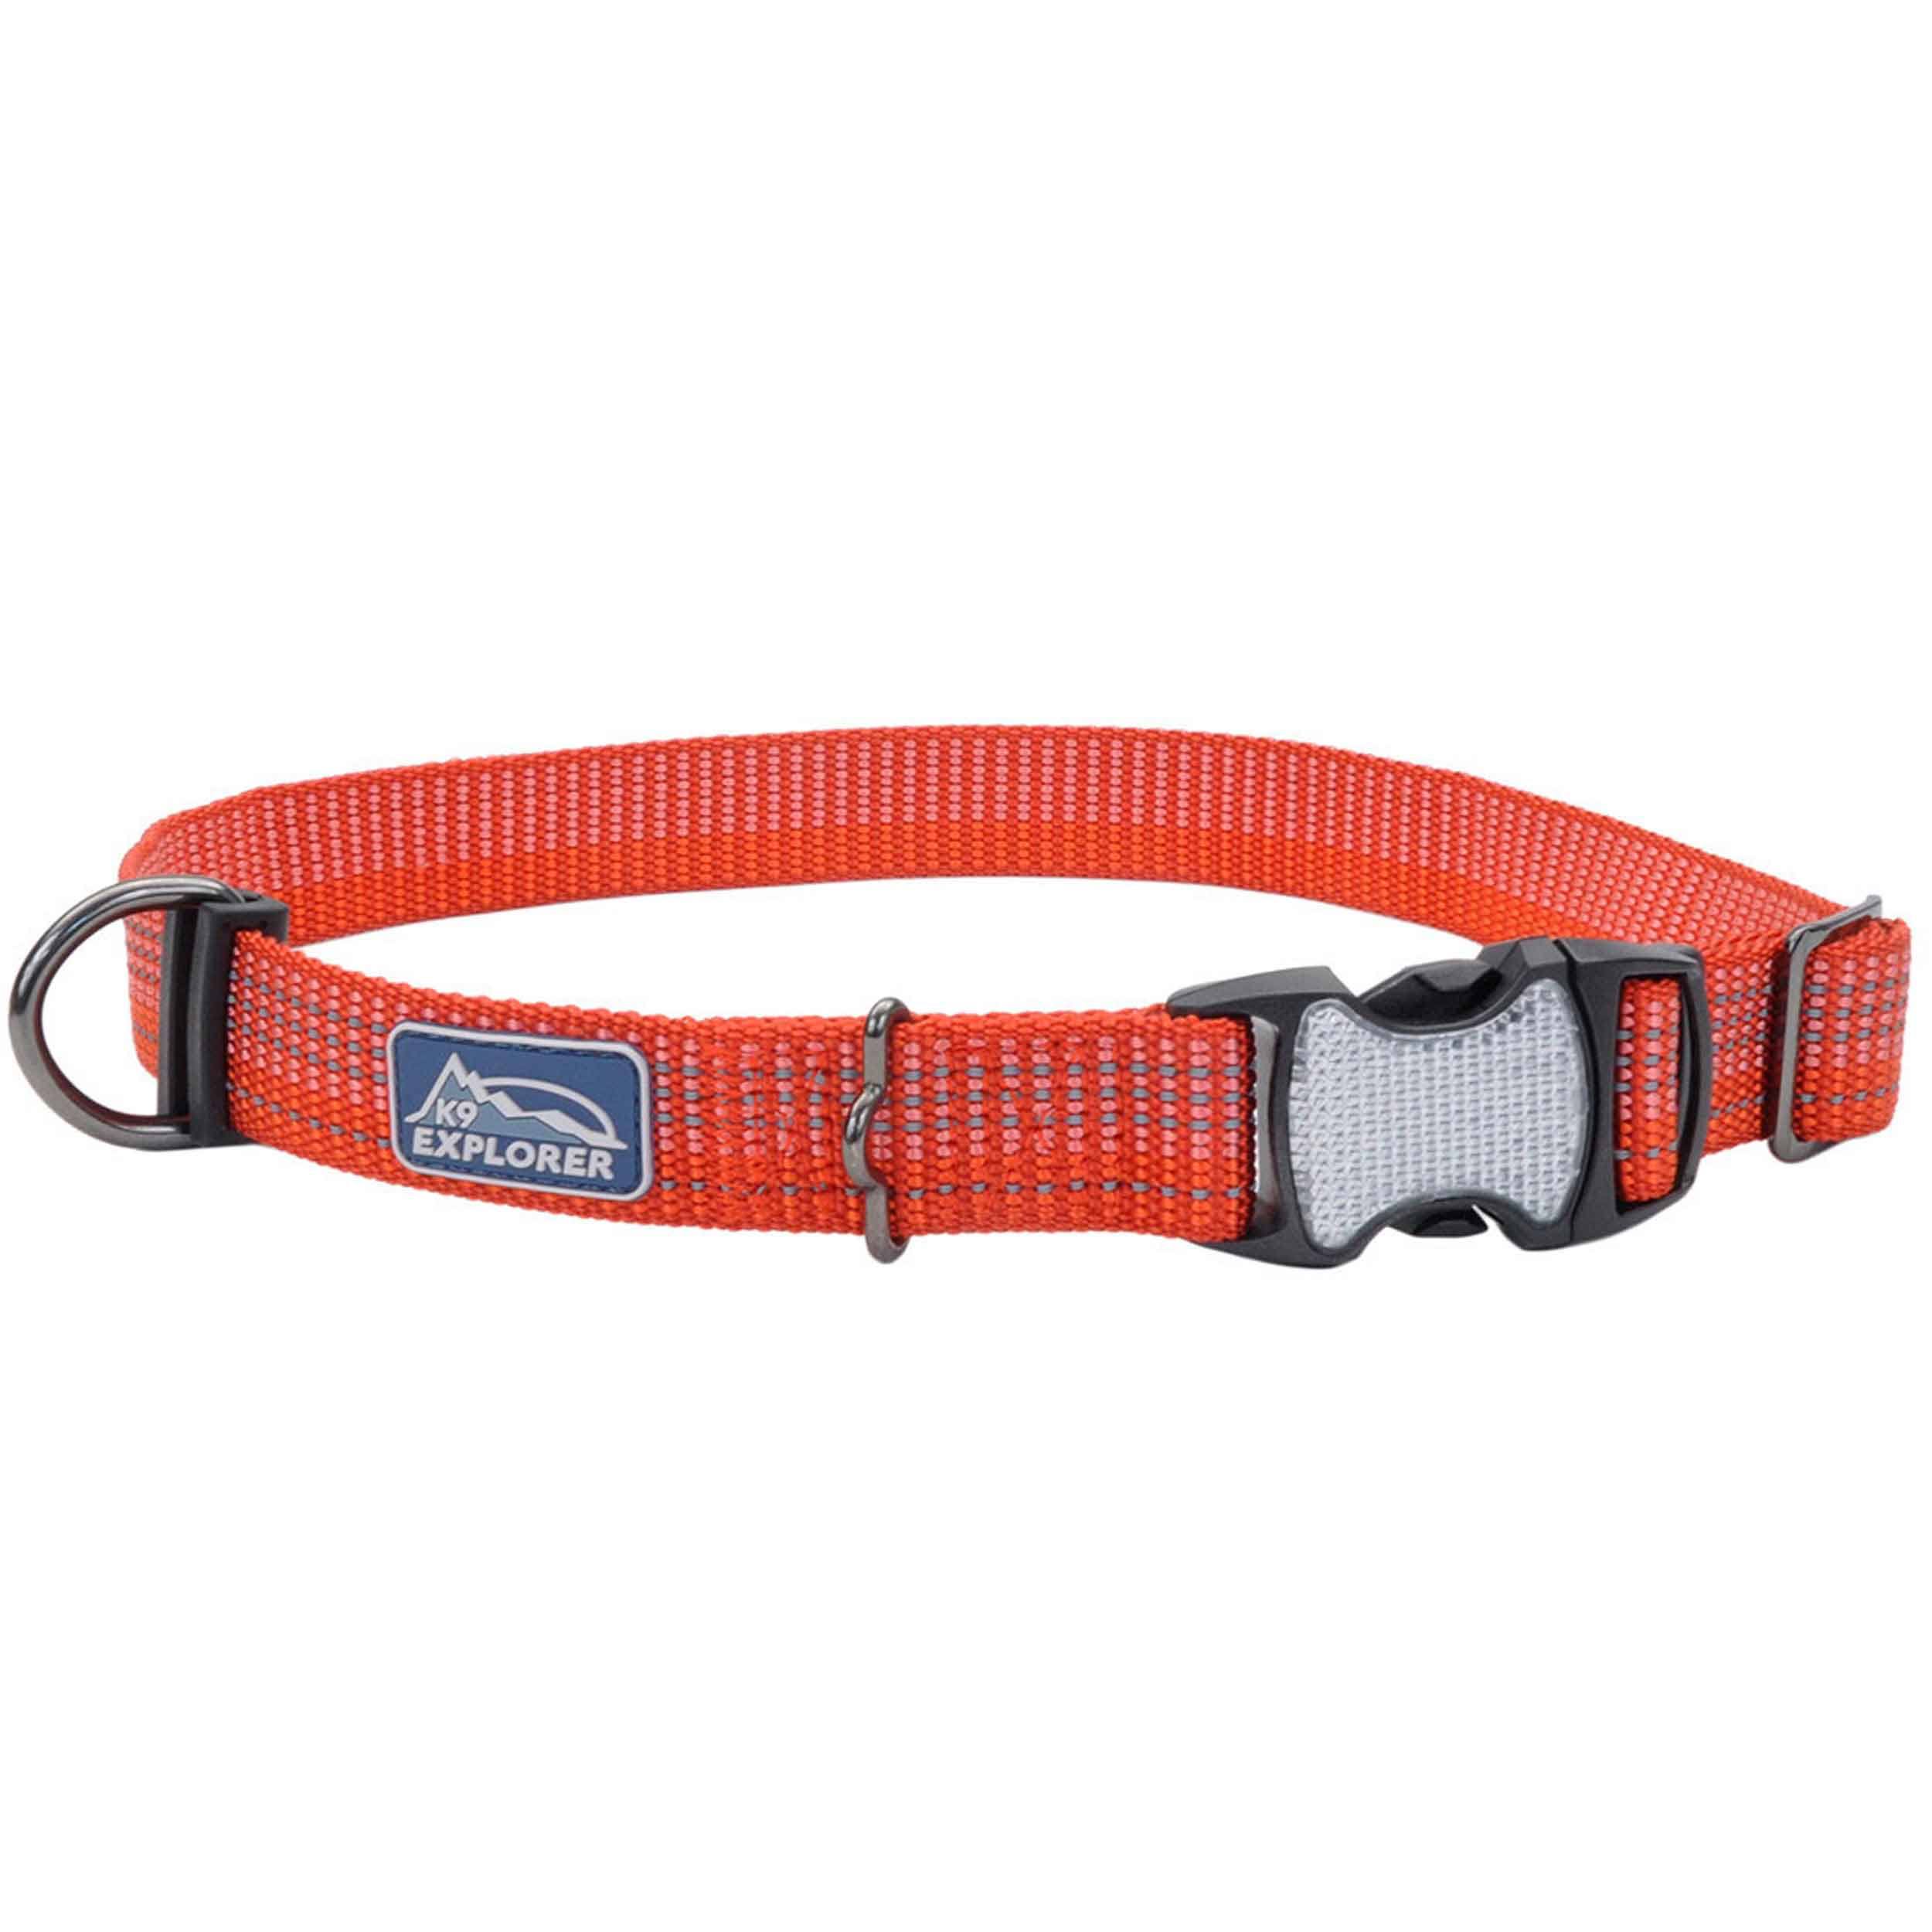 1 x 18-26-Inch Canyon K9 Explorer Reflective Adjustable Dog Collar